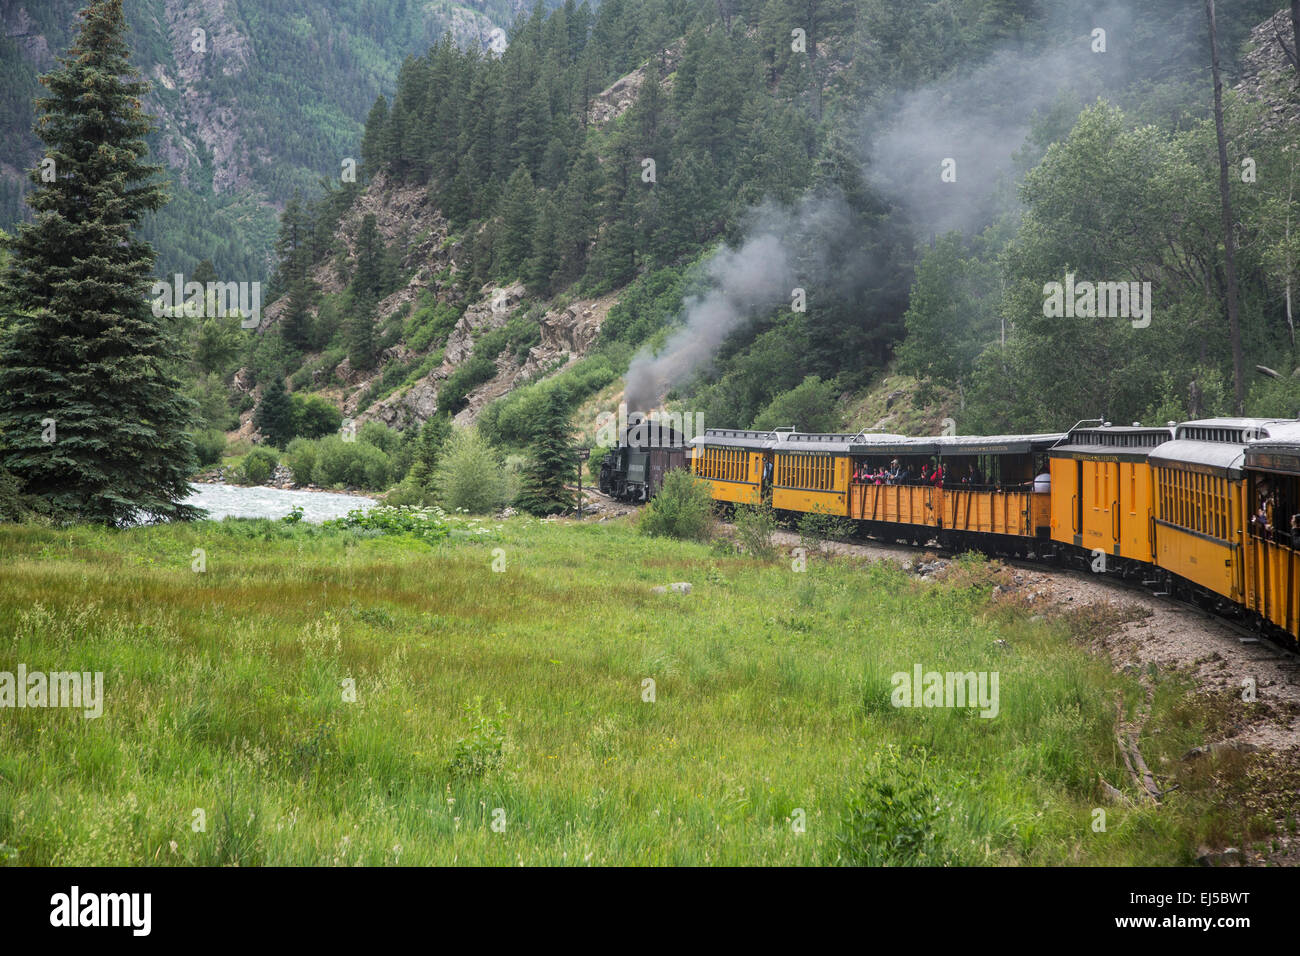 Durango and Silverton Narrow Gauge Railroad Train à vapeur ride, Durango, Colorado, USA Banque D'Images